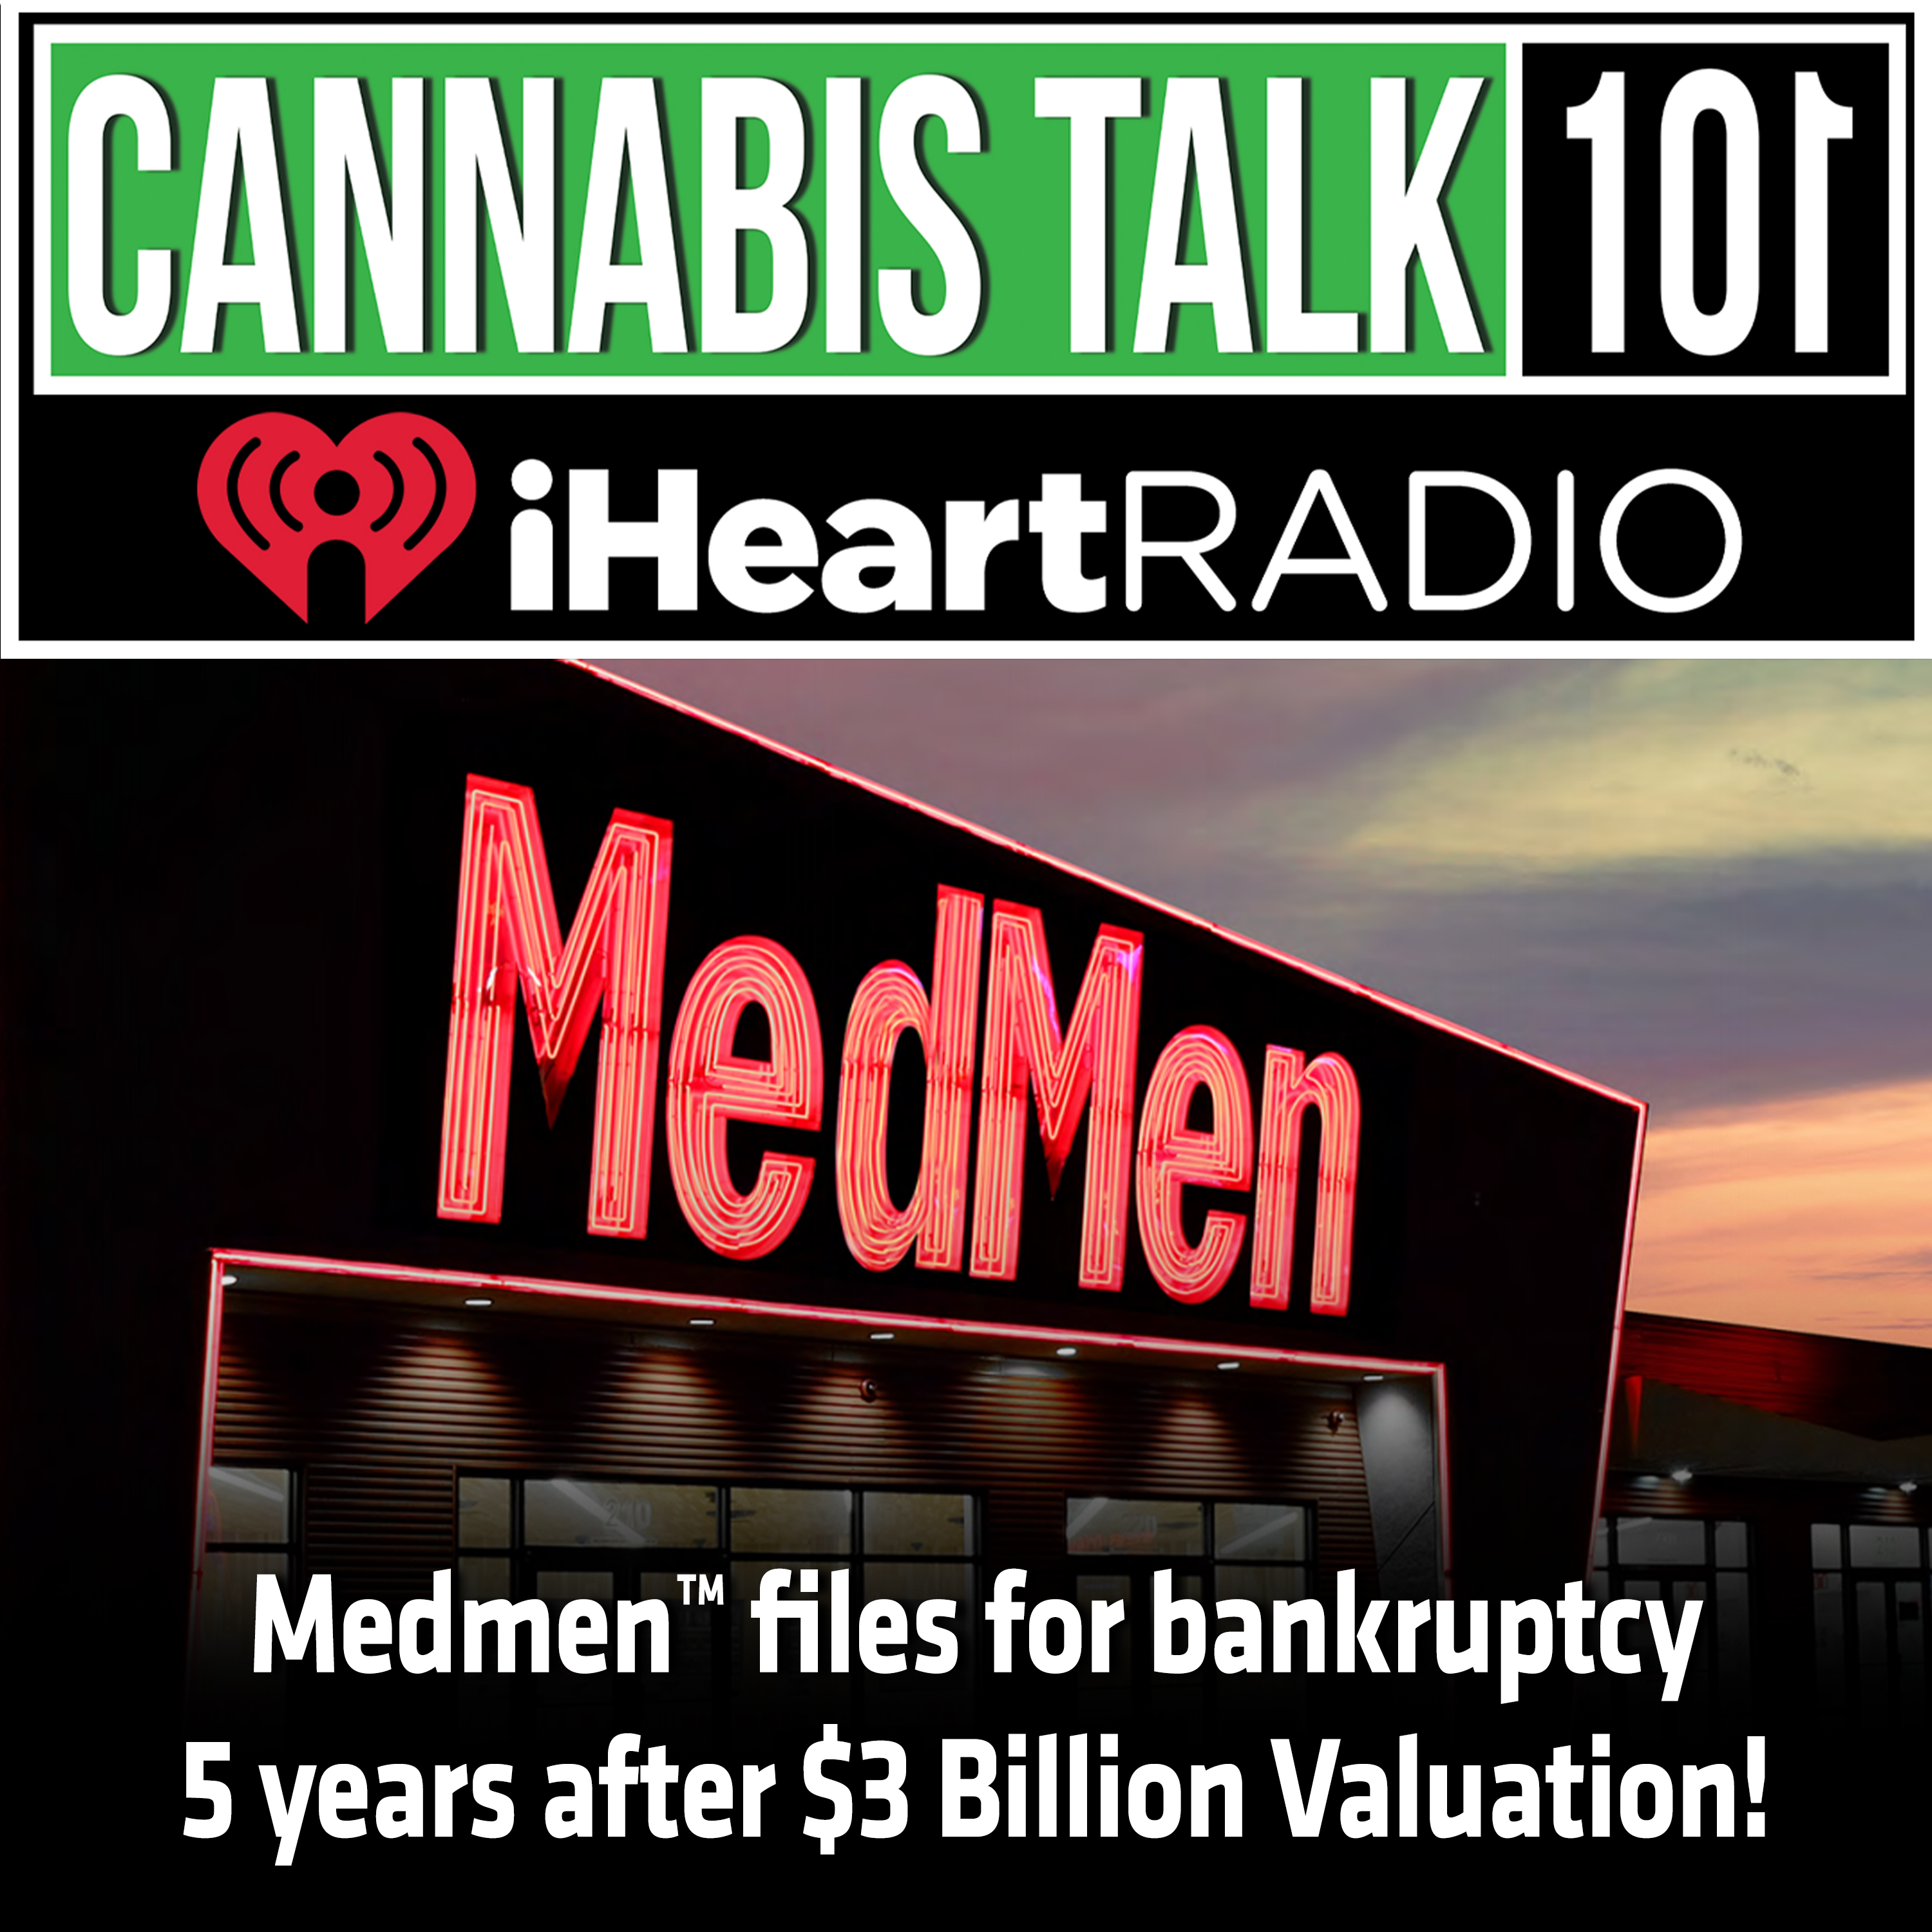 Medmen™ files for bankruptcy 5 years after $3 Billion Valuation!